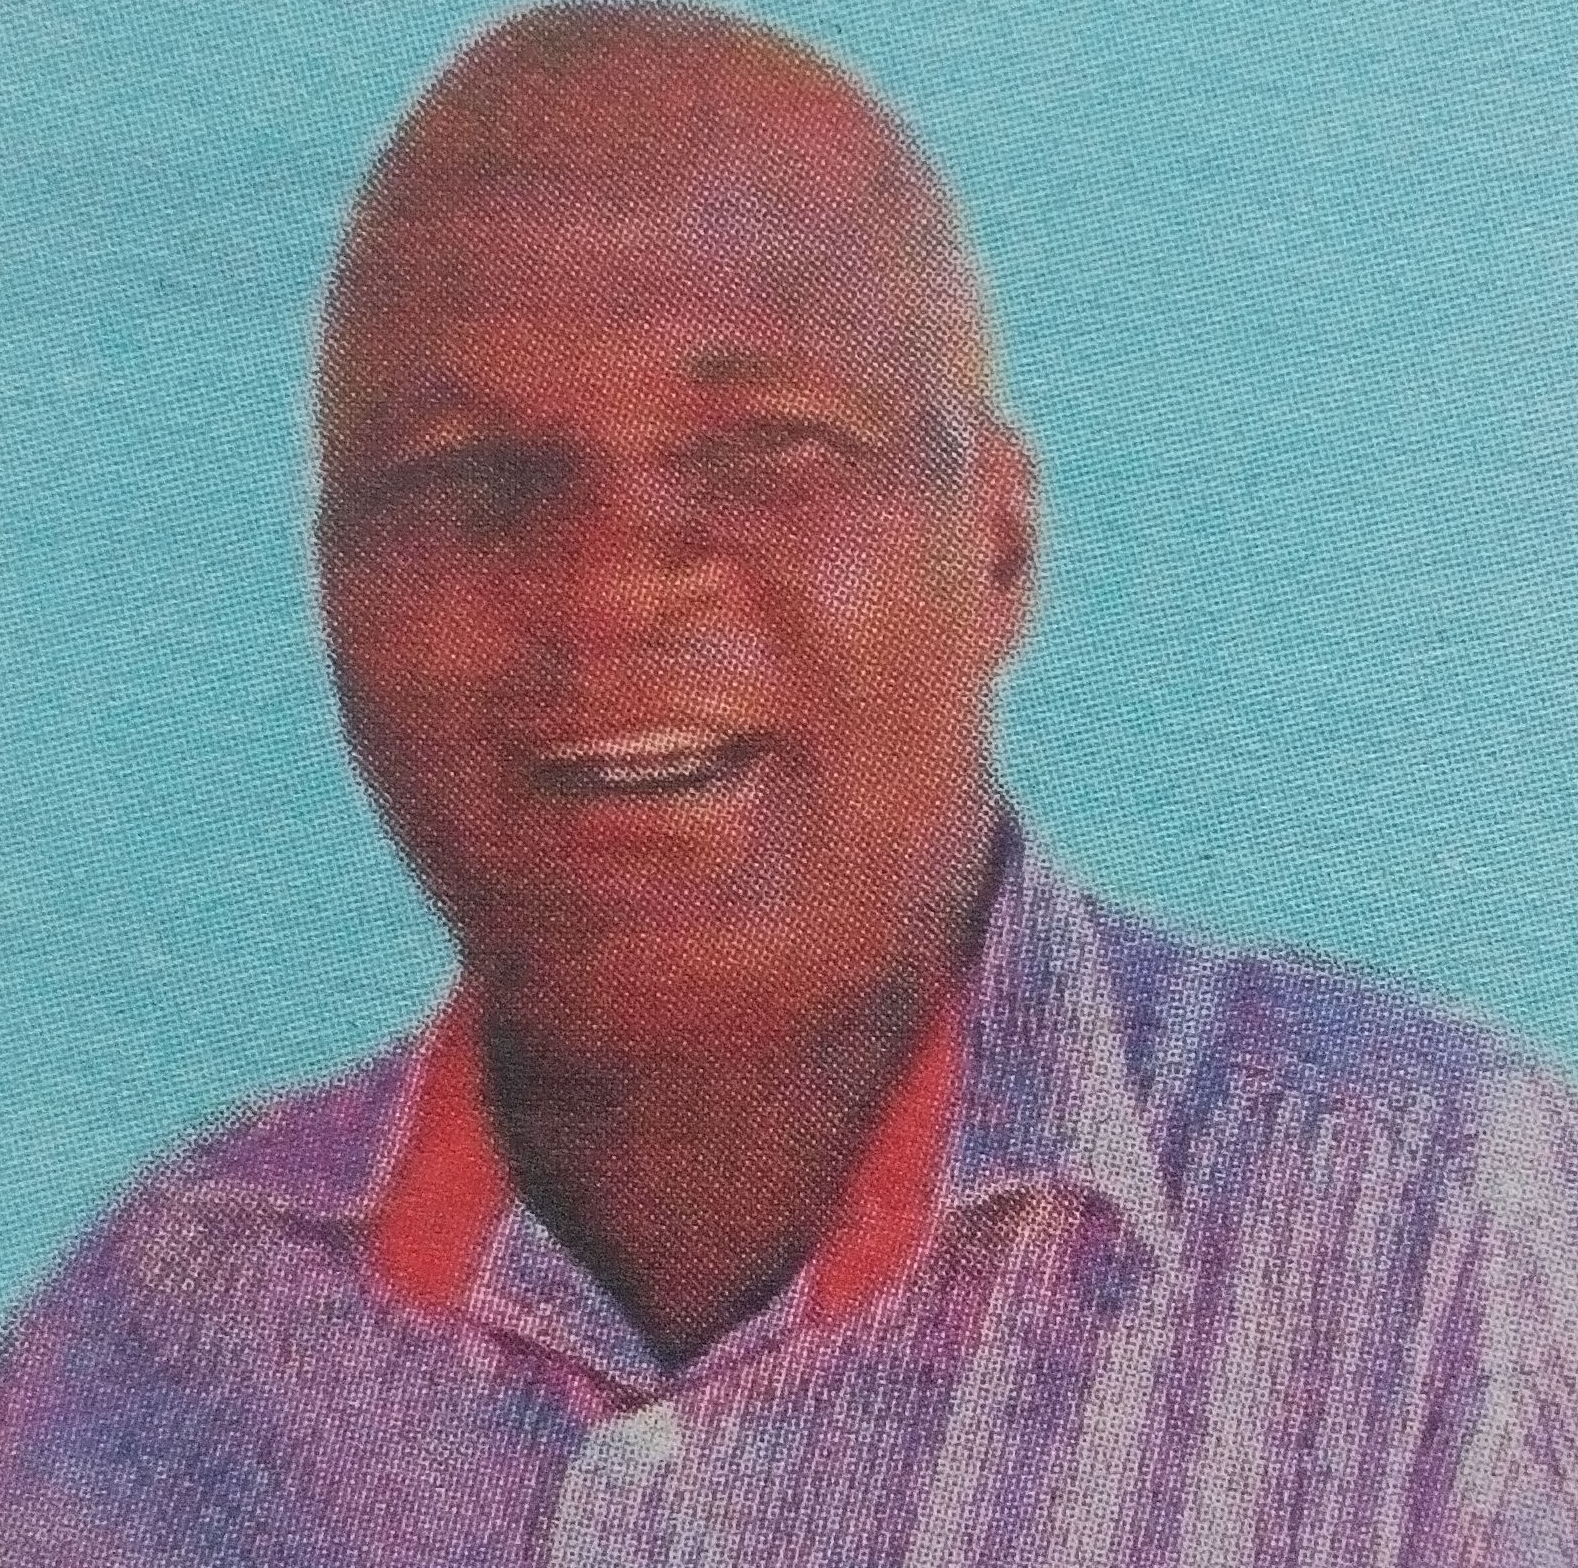 Obituary Image of Stanley Kiogora M'Muga